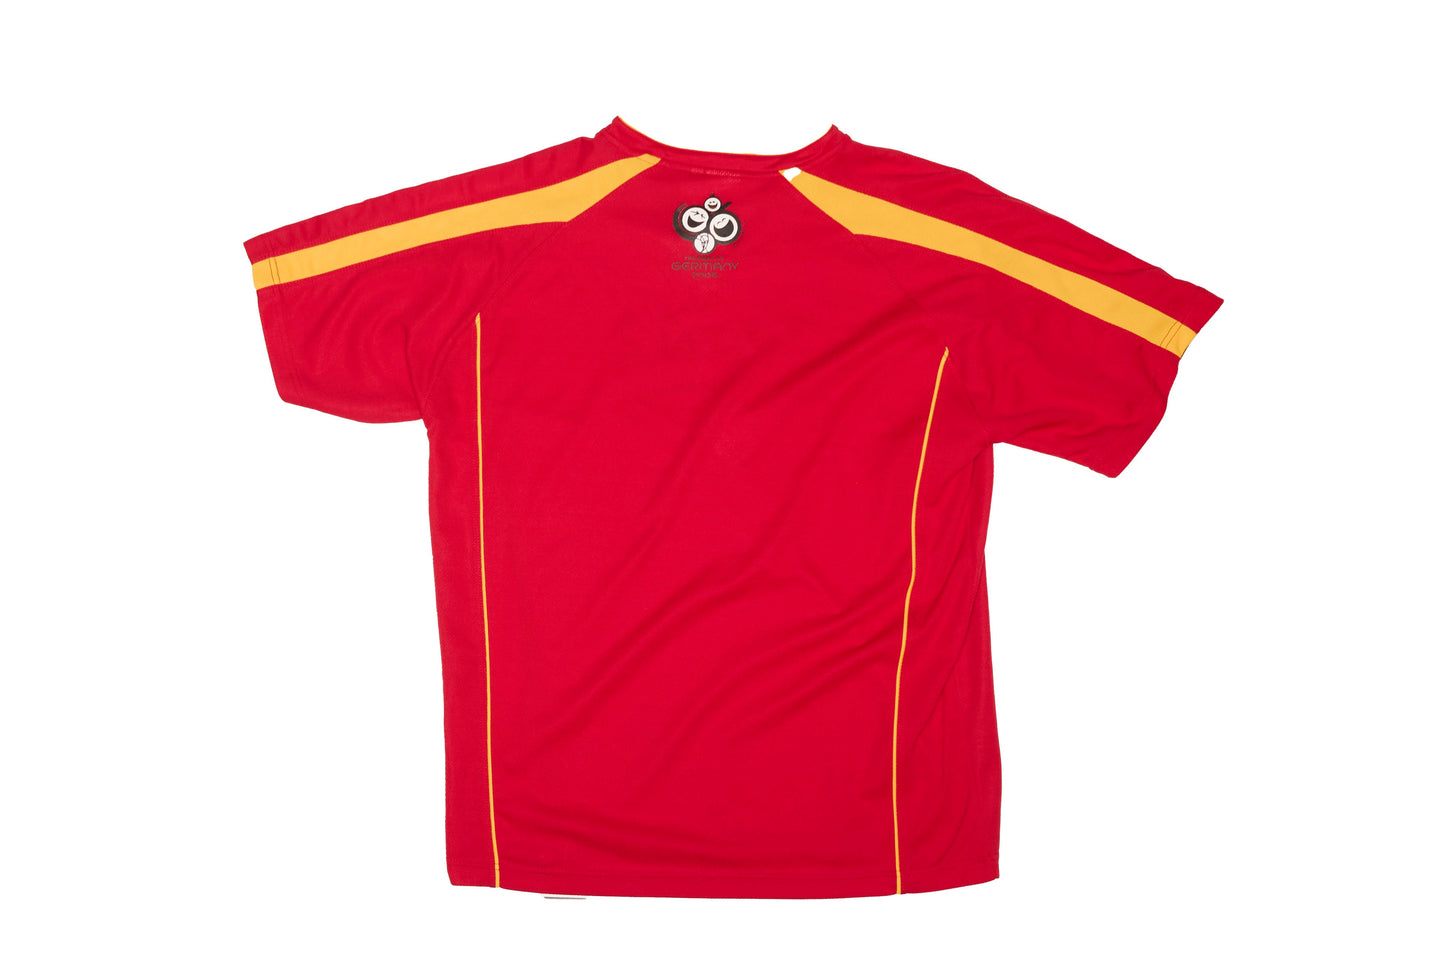 Mens Replica Spain 2006 National Shirt - XL